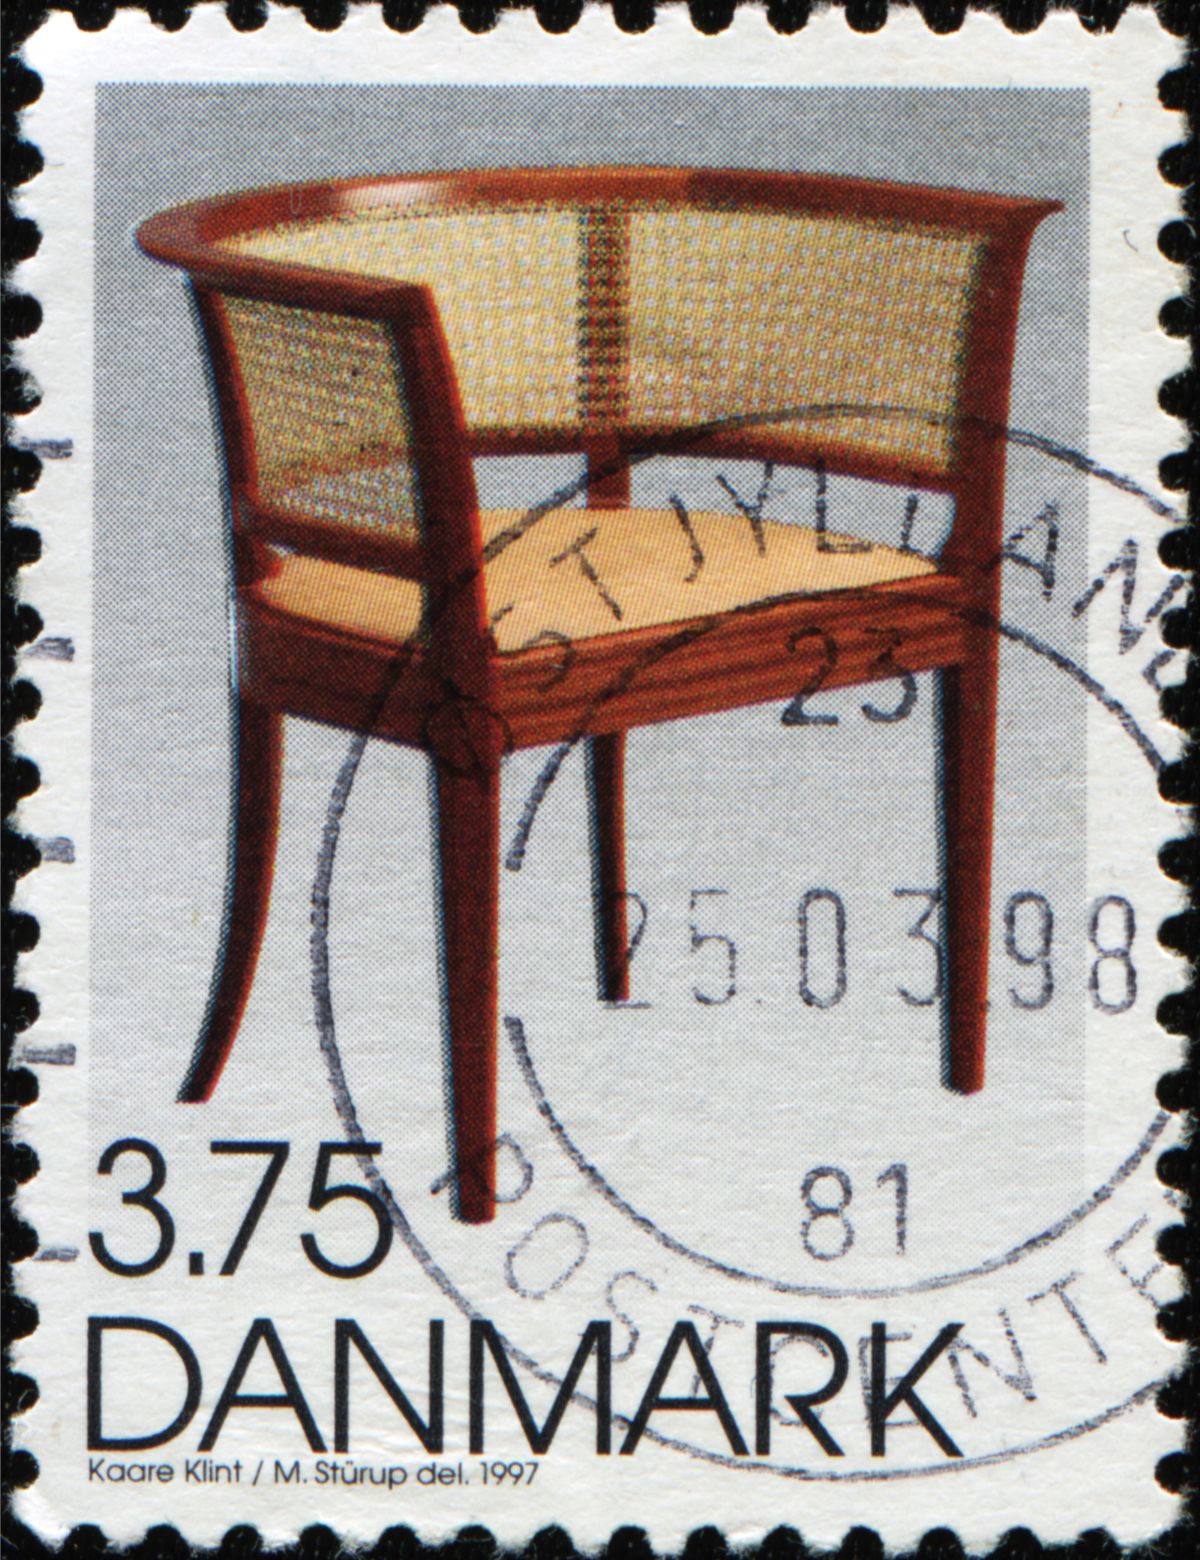 A Danish postage stamp featuring a chair by Kaare Klint Danish architect and furniture designer, circa 1997. Photo: IgorGolovniov / Shutterstock.com.